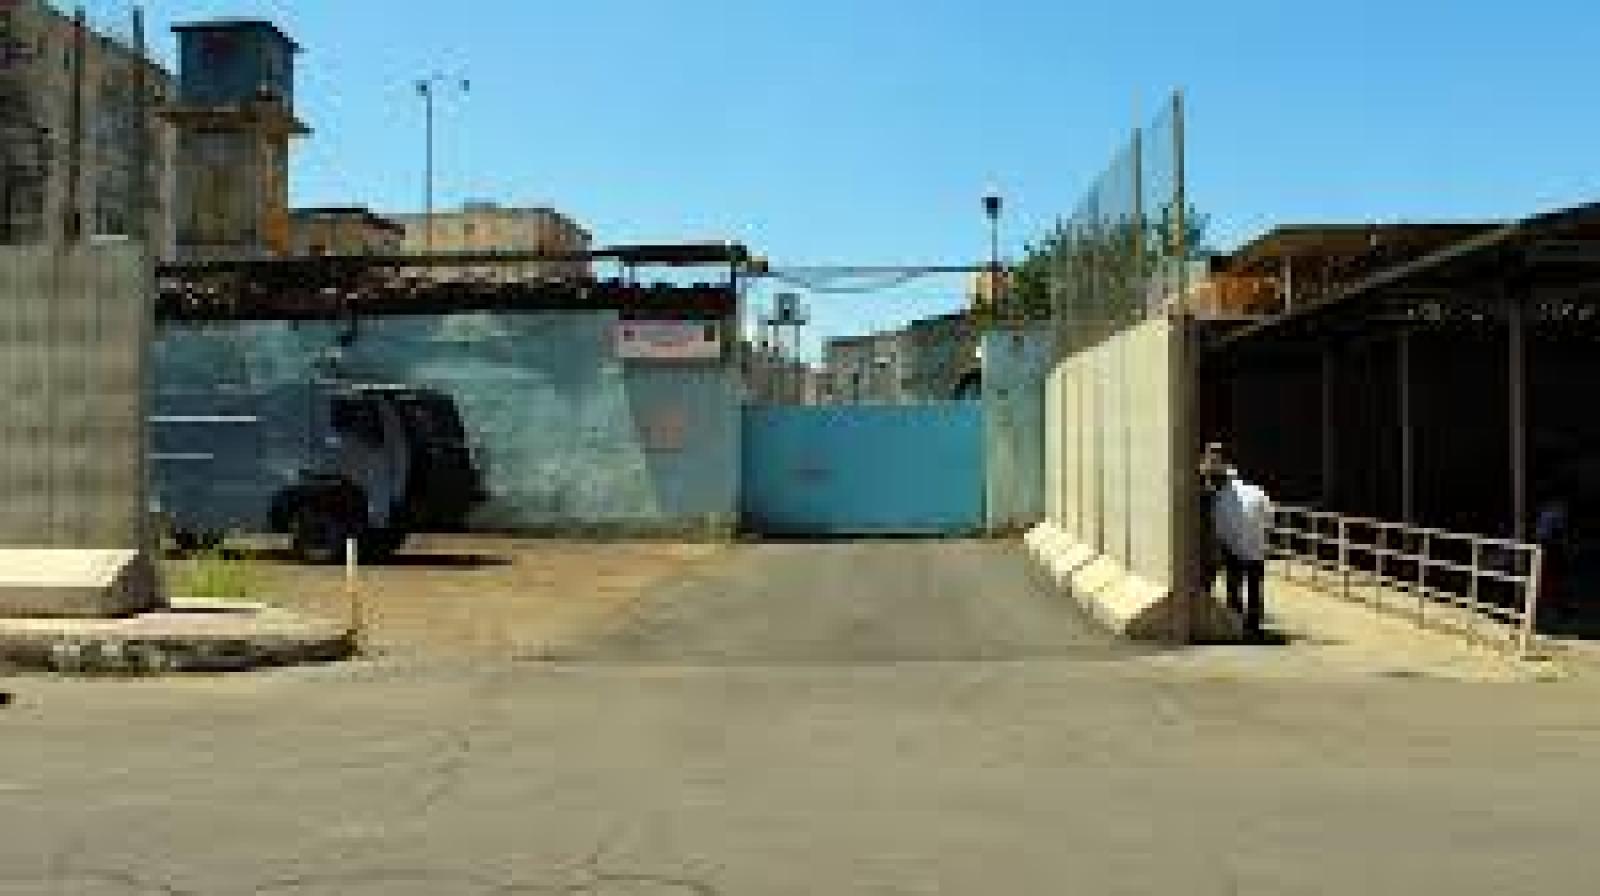 Diyarbakir Prison’s picture street view, 2000s, Diyarbakır